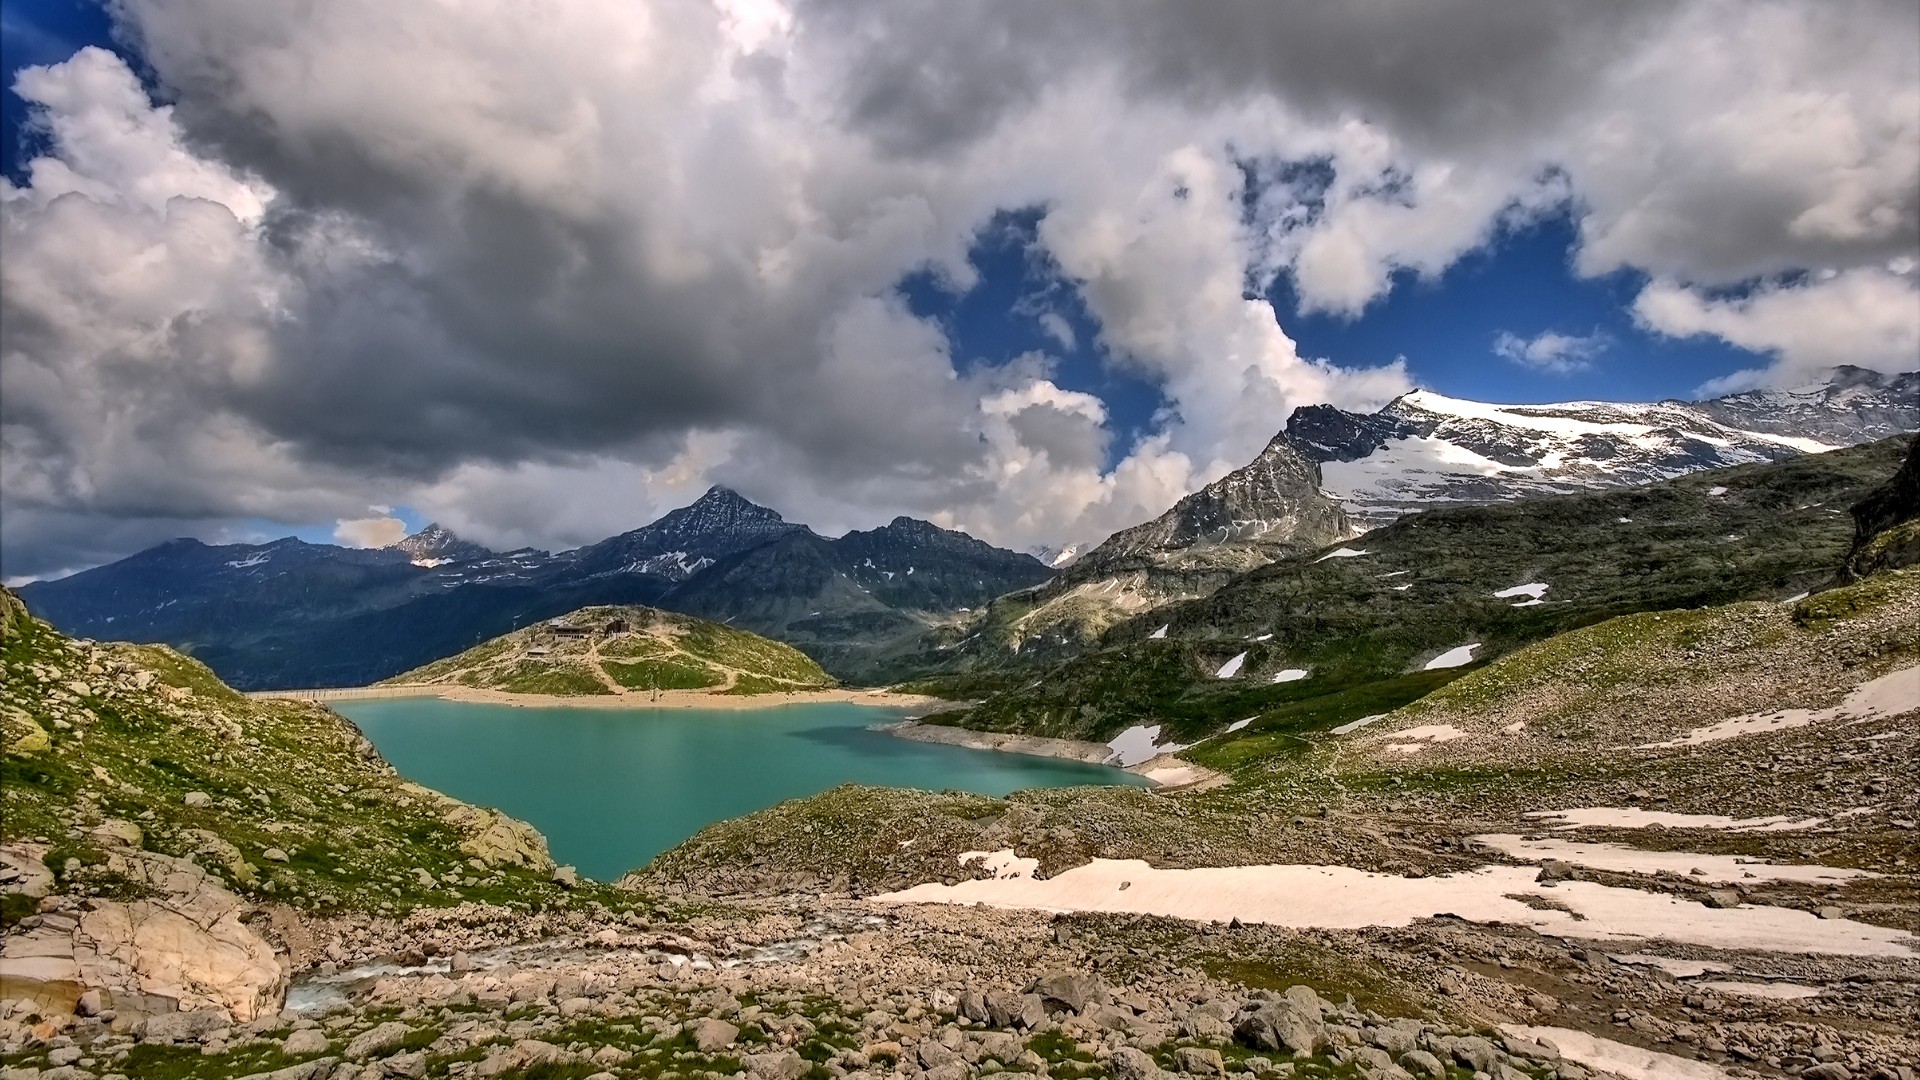 mountains, clouds, nature, lakes - desktop wallpaper